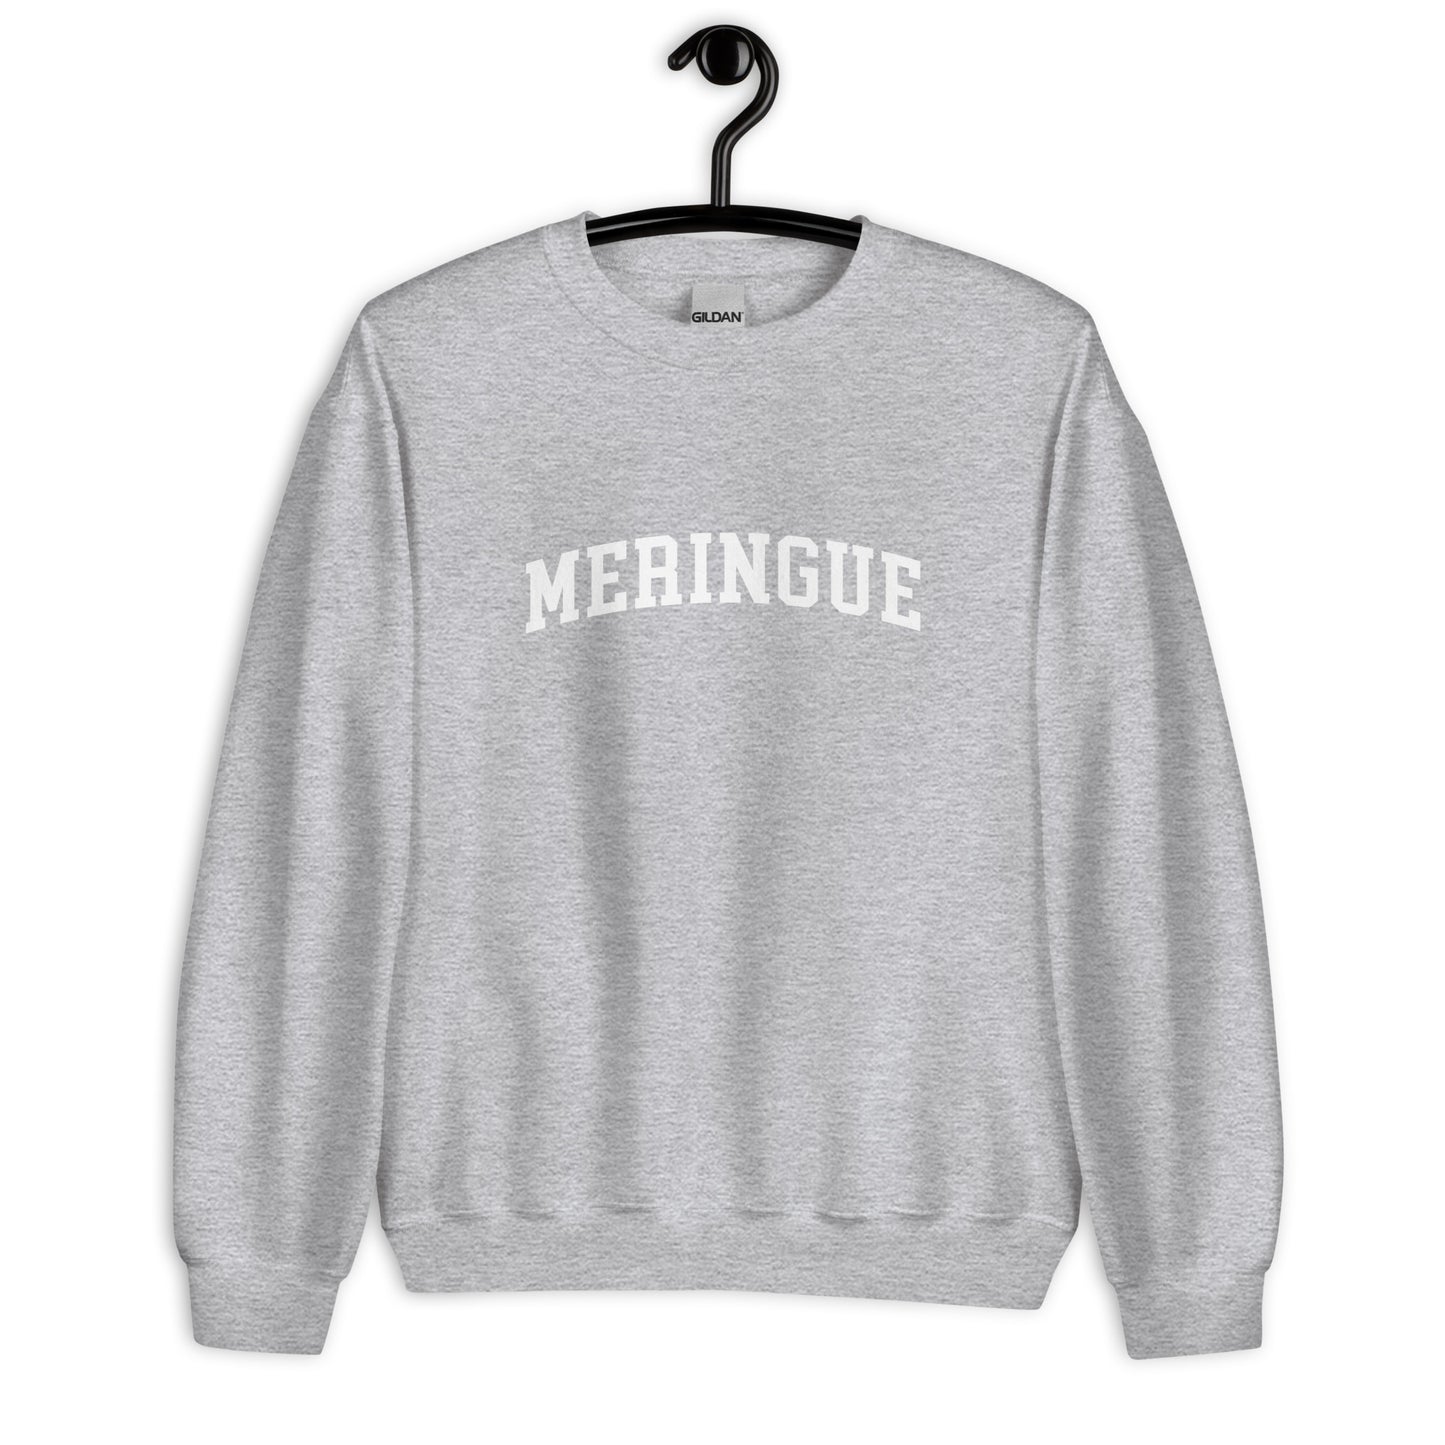 Meringue Sweatshirt - Arched Font